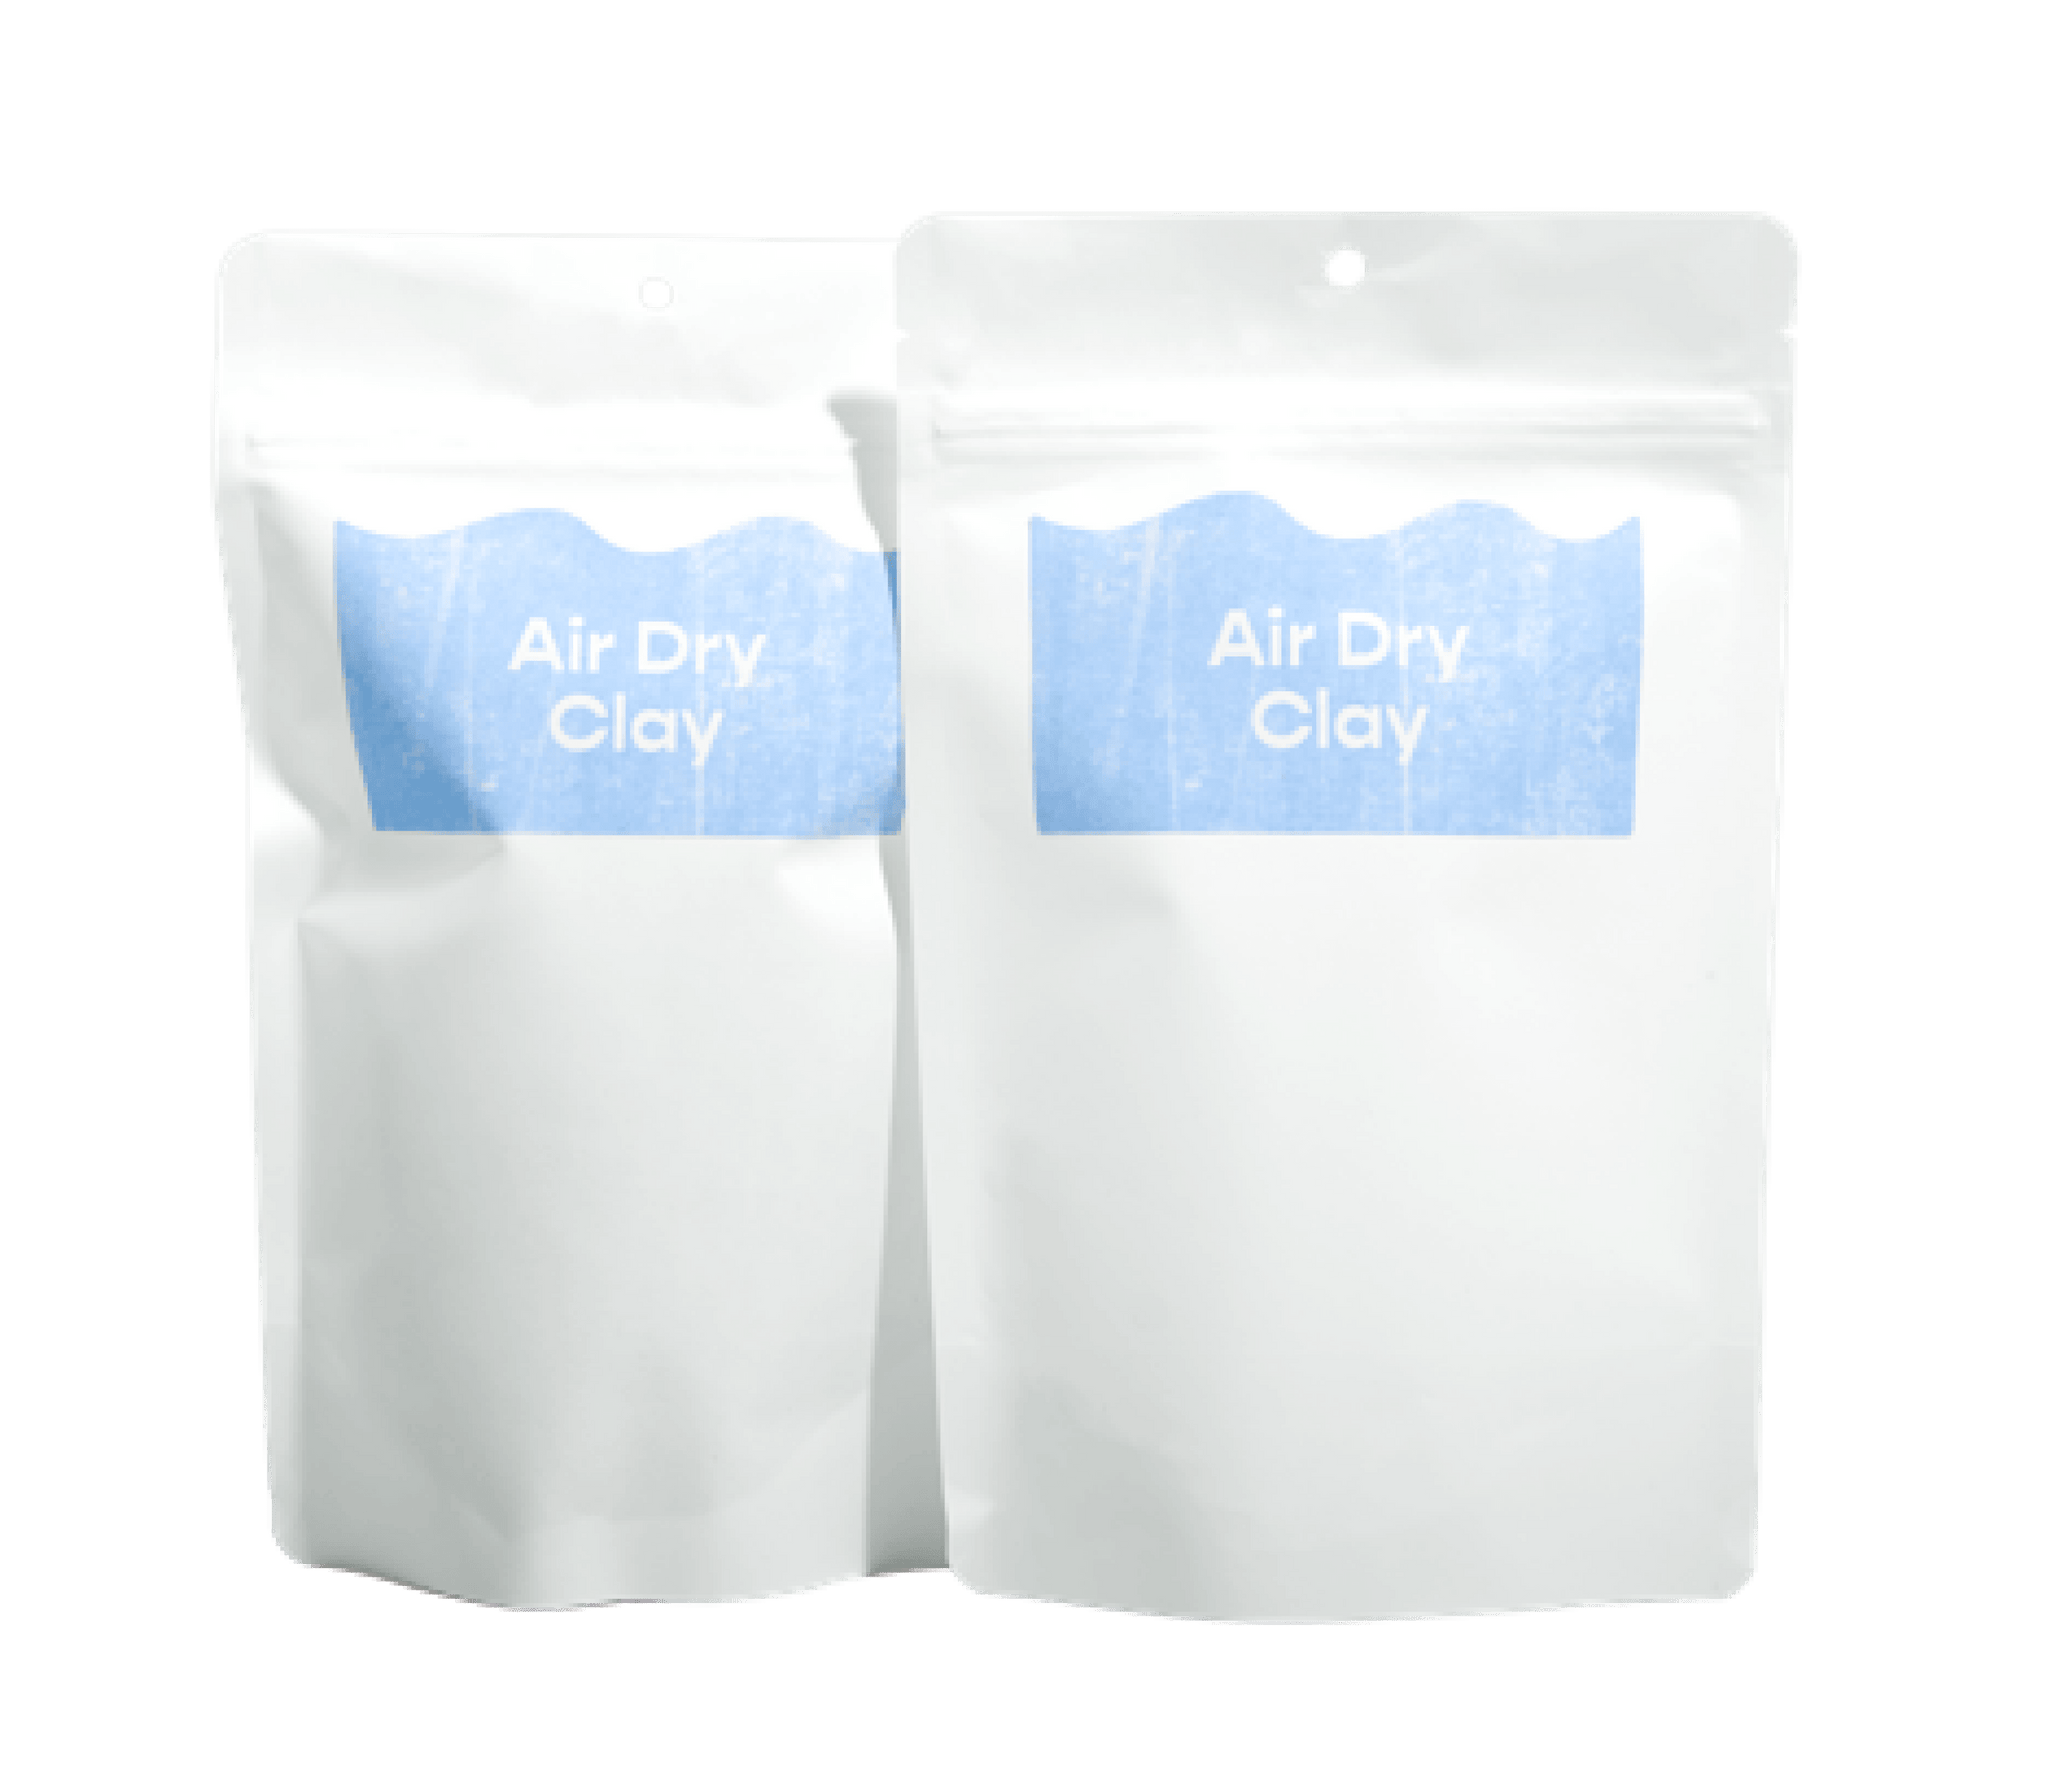 10 Air Dry Clay Beginner Friendly Tutorials